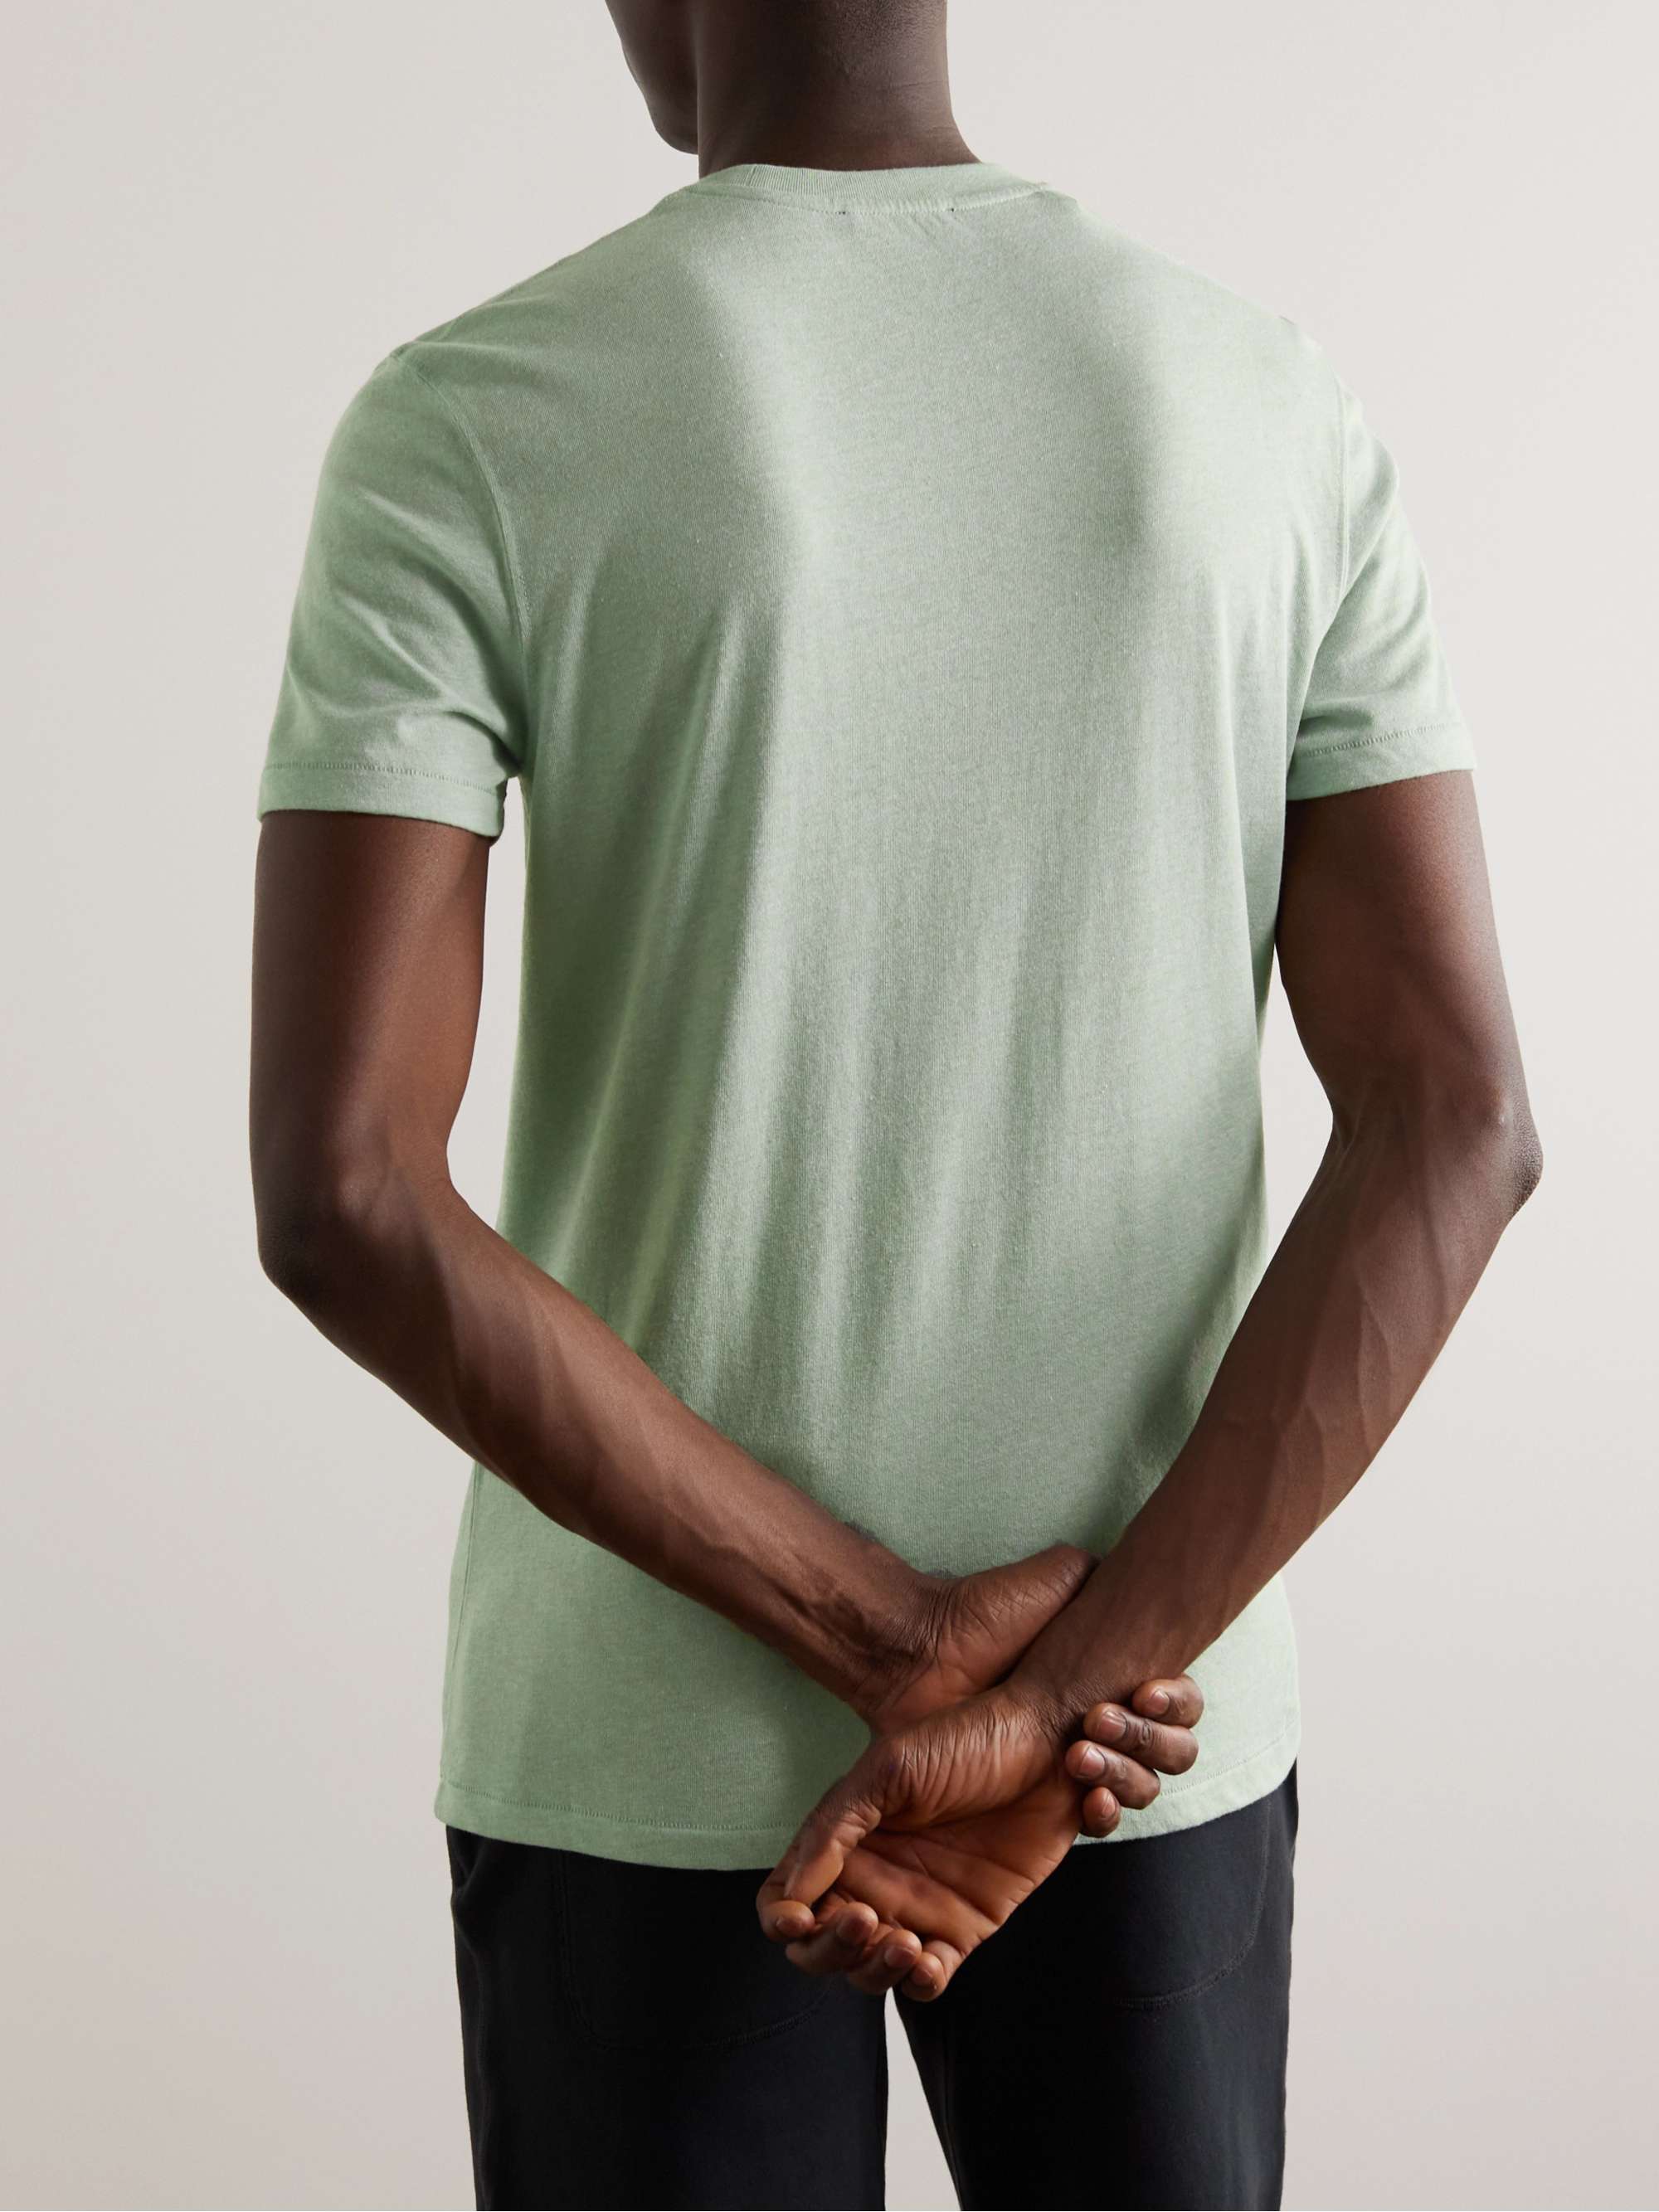 TOM FORD Cotton-Blend Jersey T-Shirt